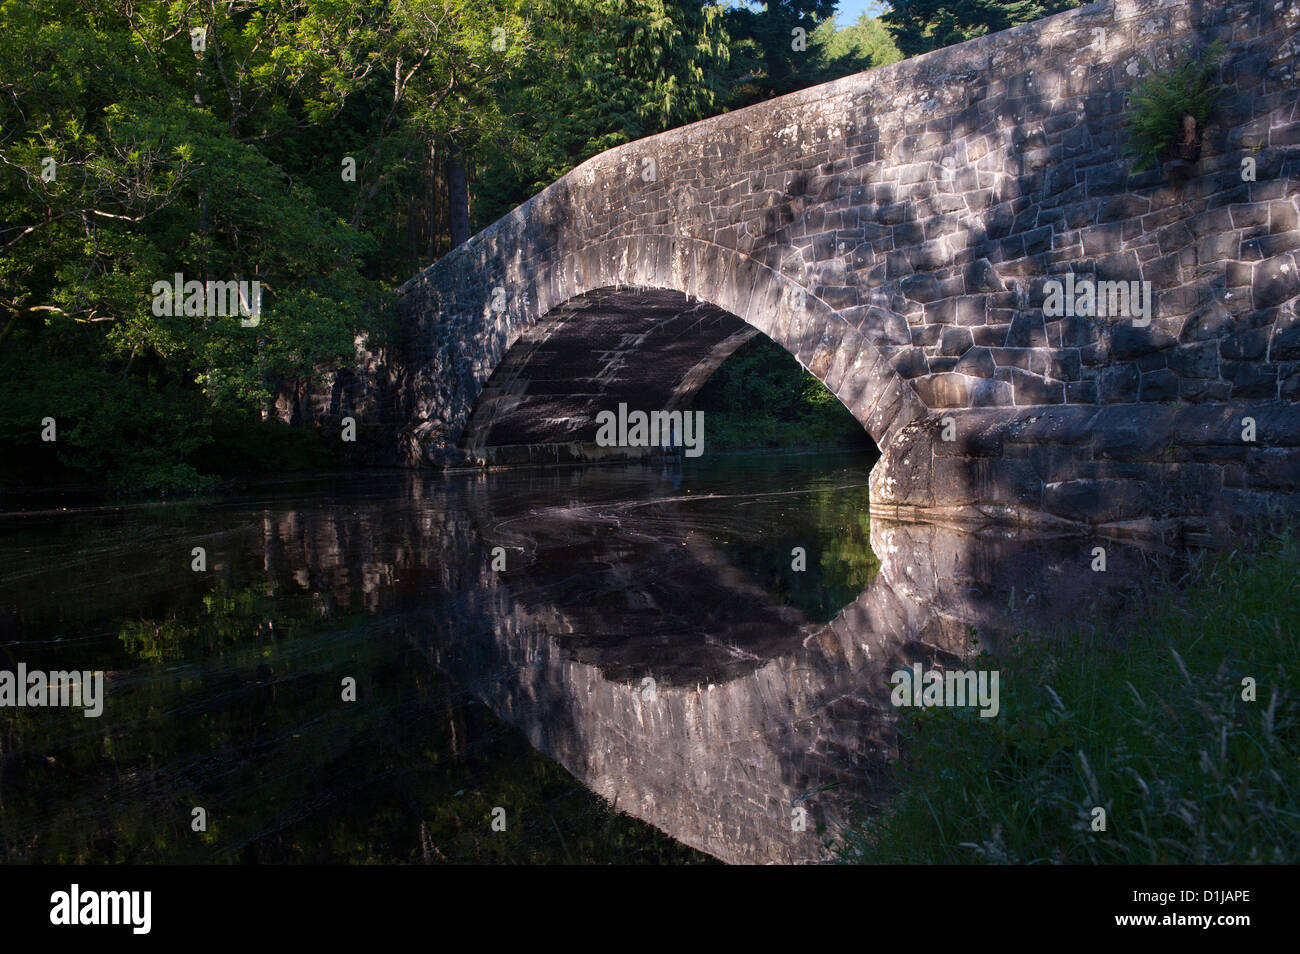 Bridge reflected in the Afon Elan river. Elan Valley, Wales. Stock Photo